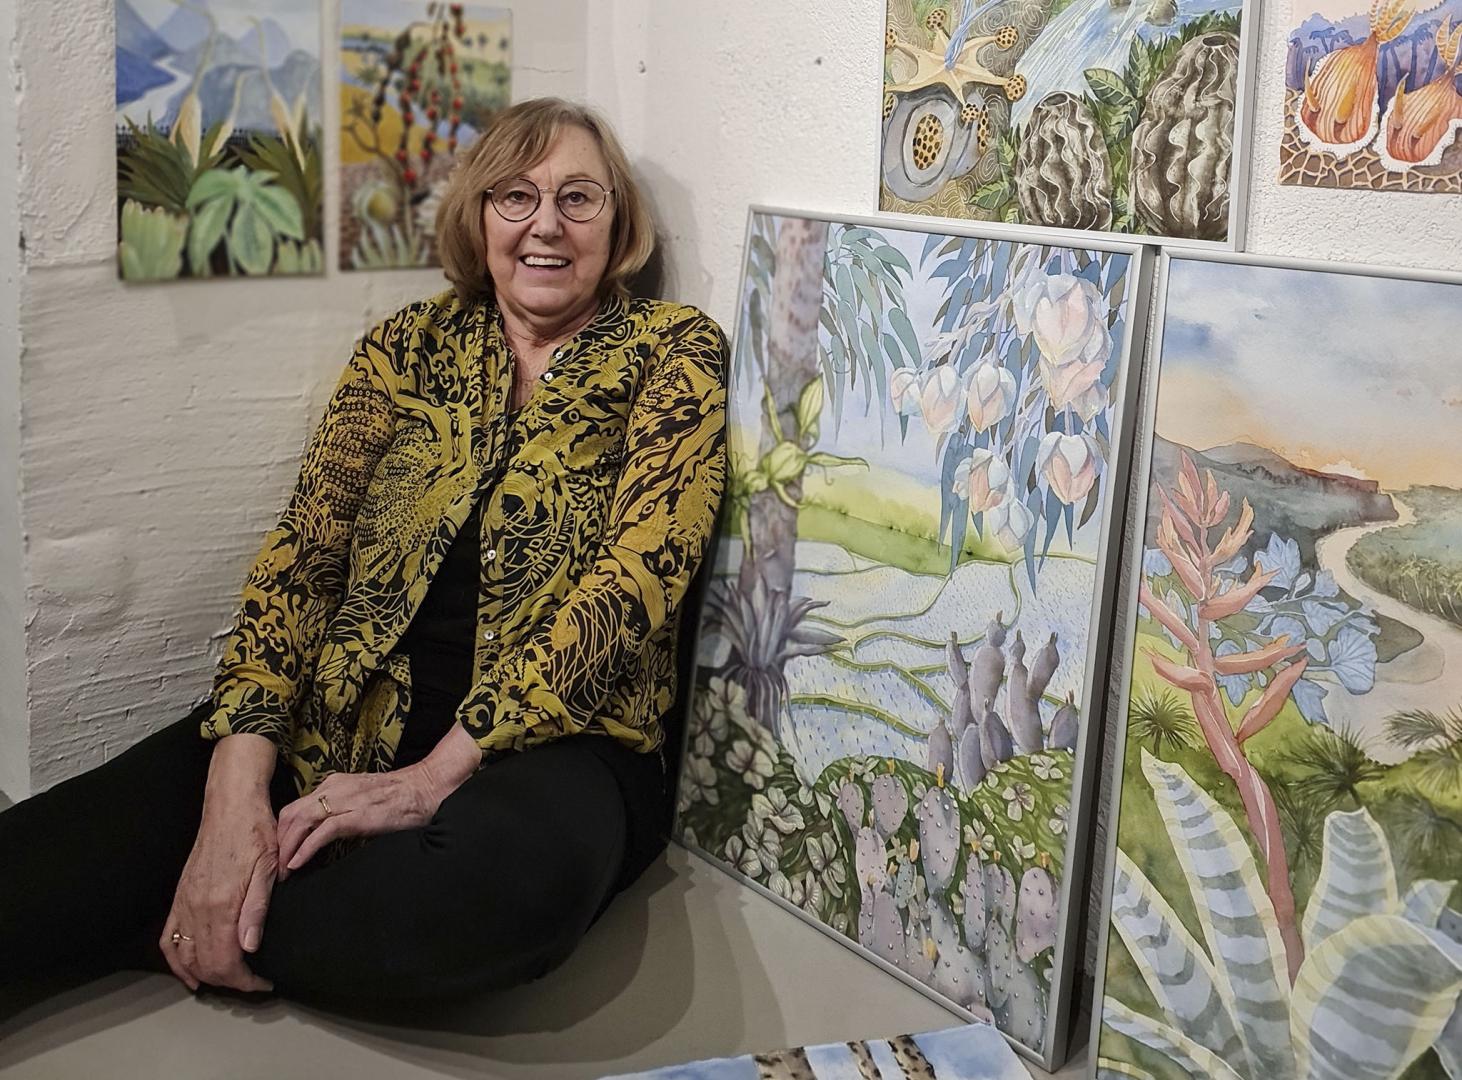 Berit Olander, woman sitting on the floor next to paintings